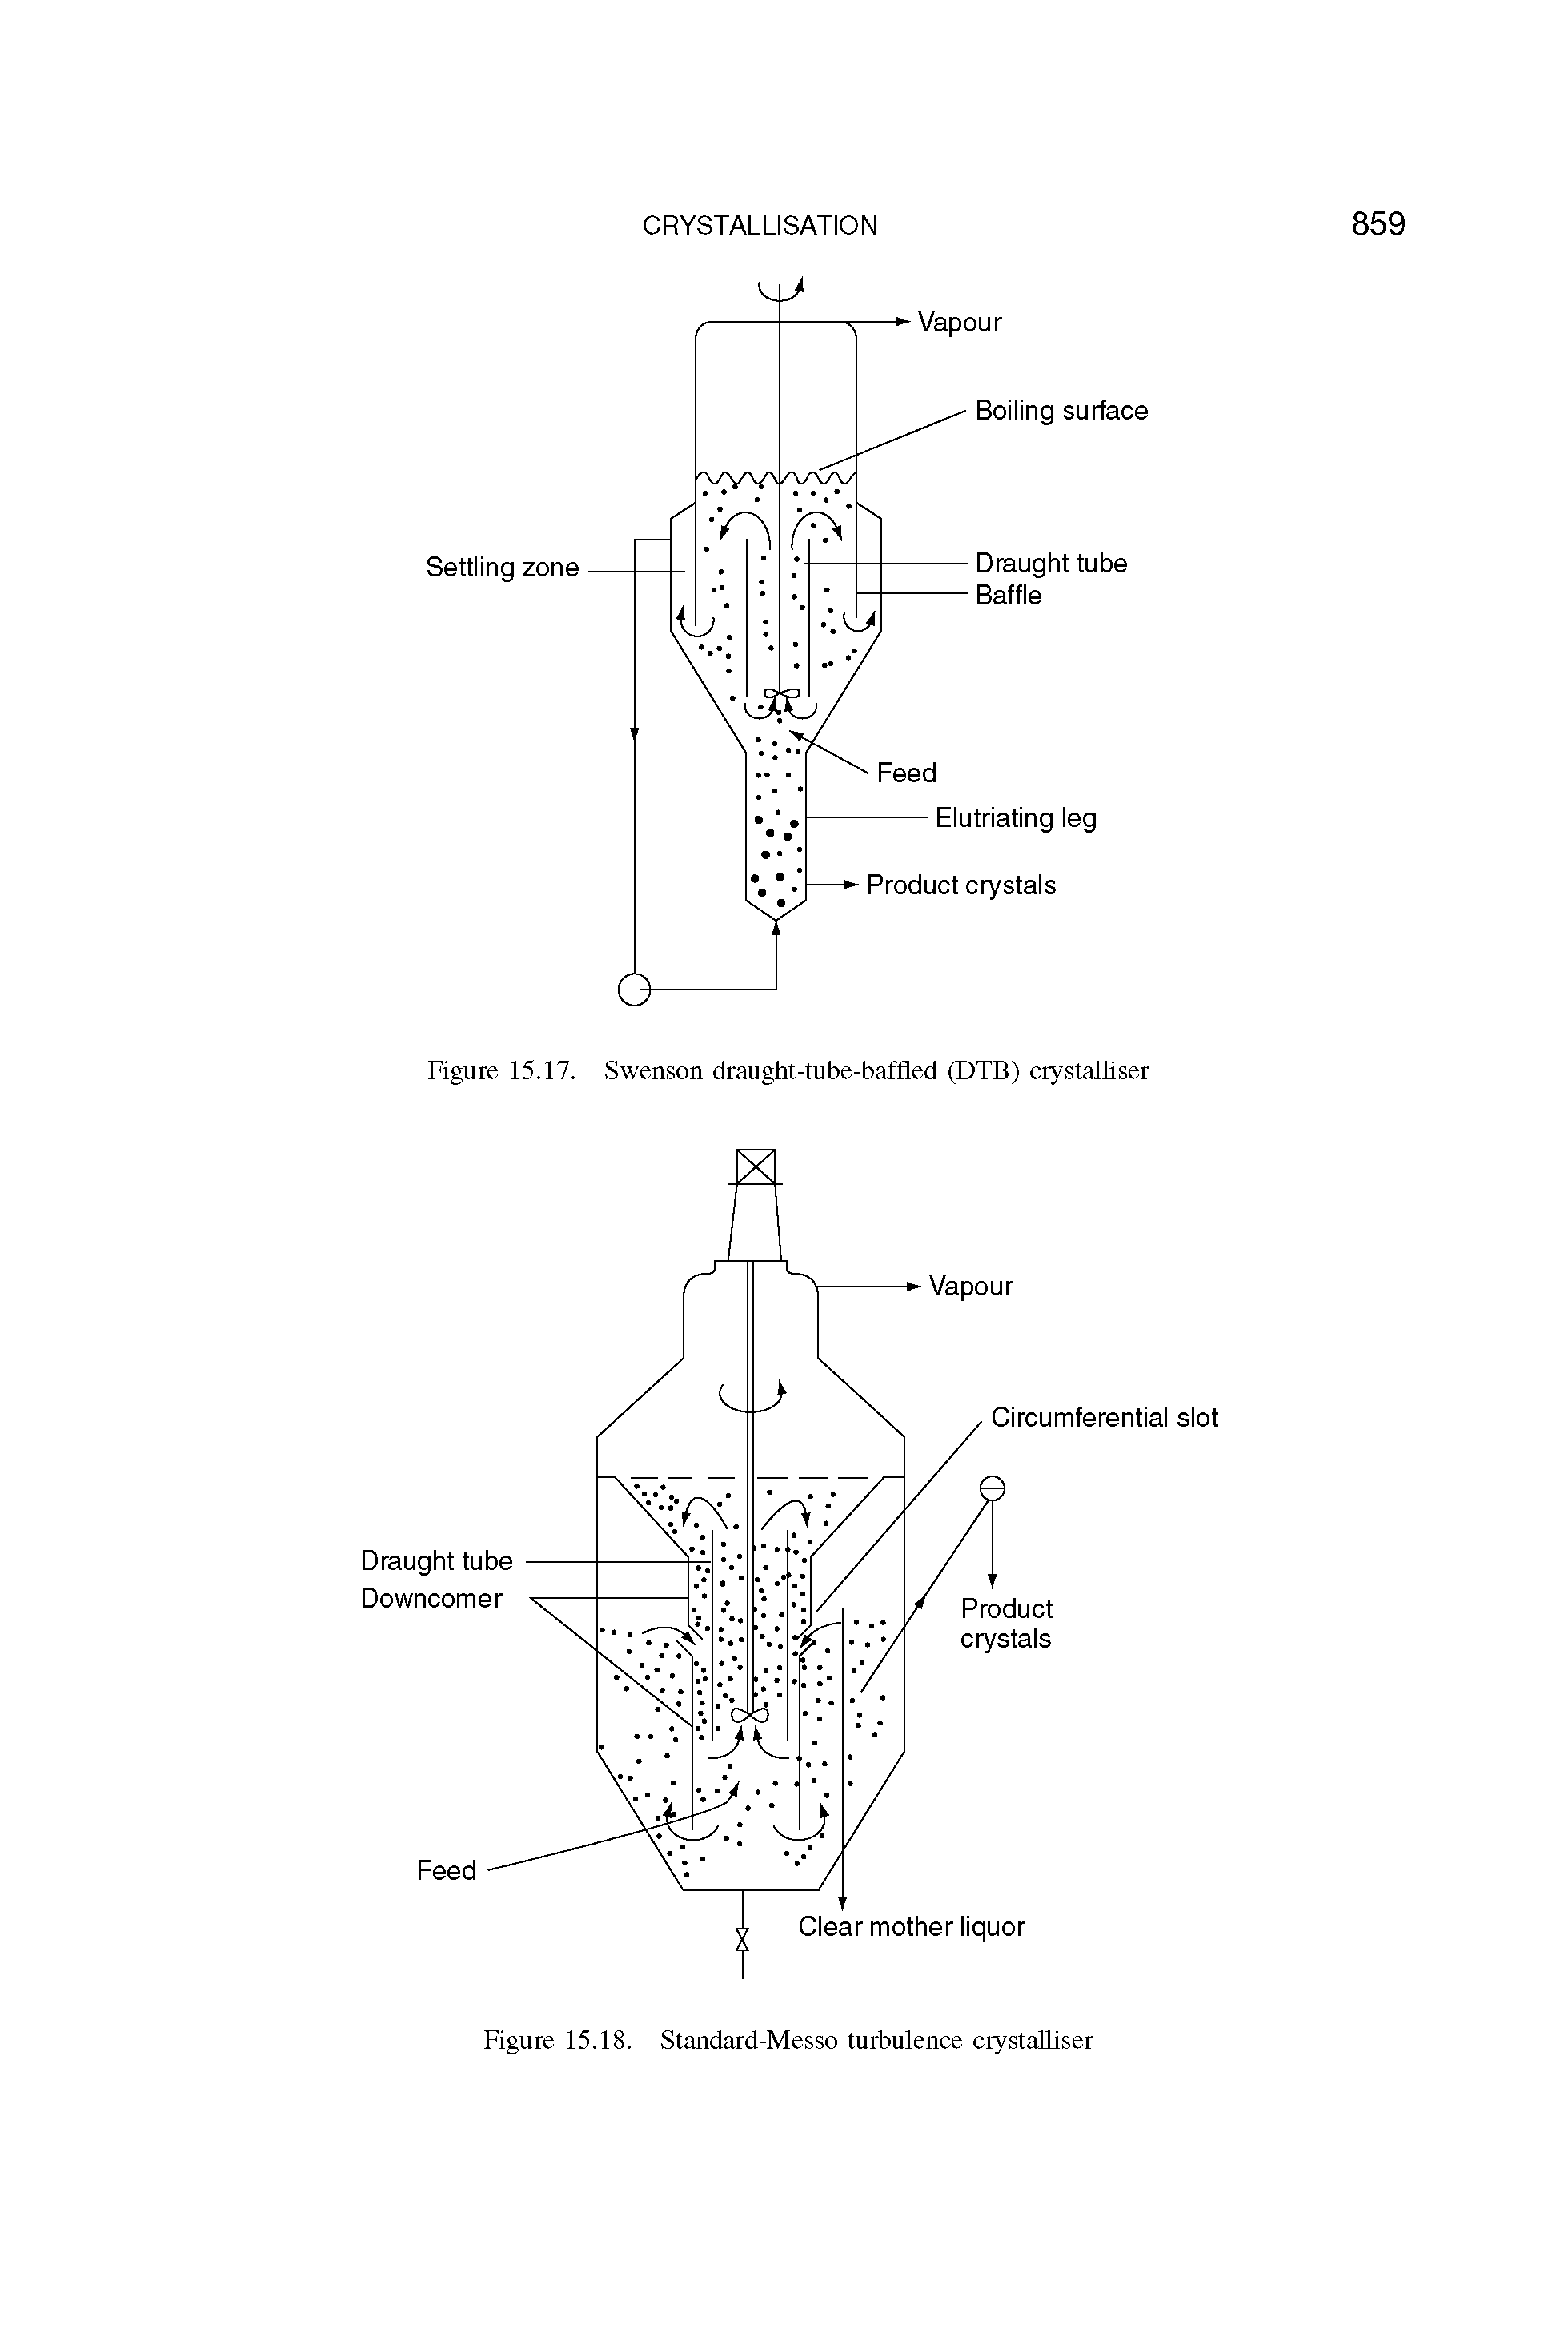 Figure 15.17. Swenson draught-tube-baffled (DTB) crystalbser...